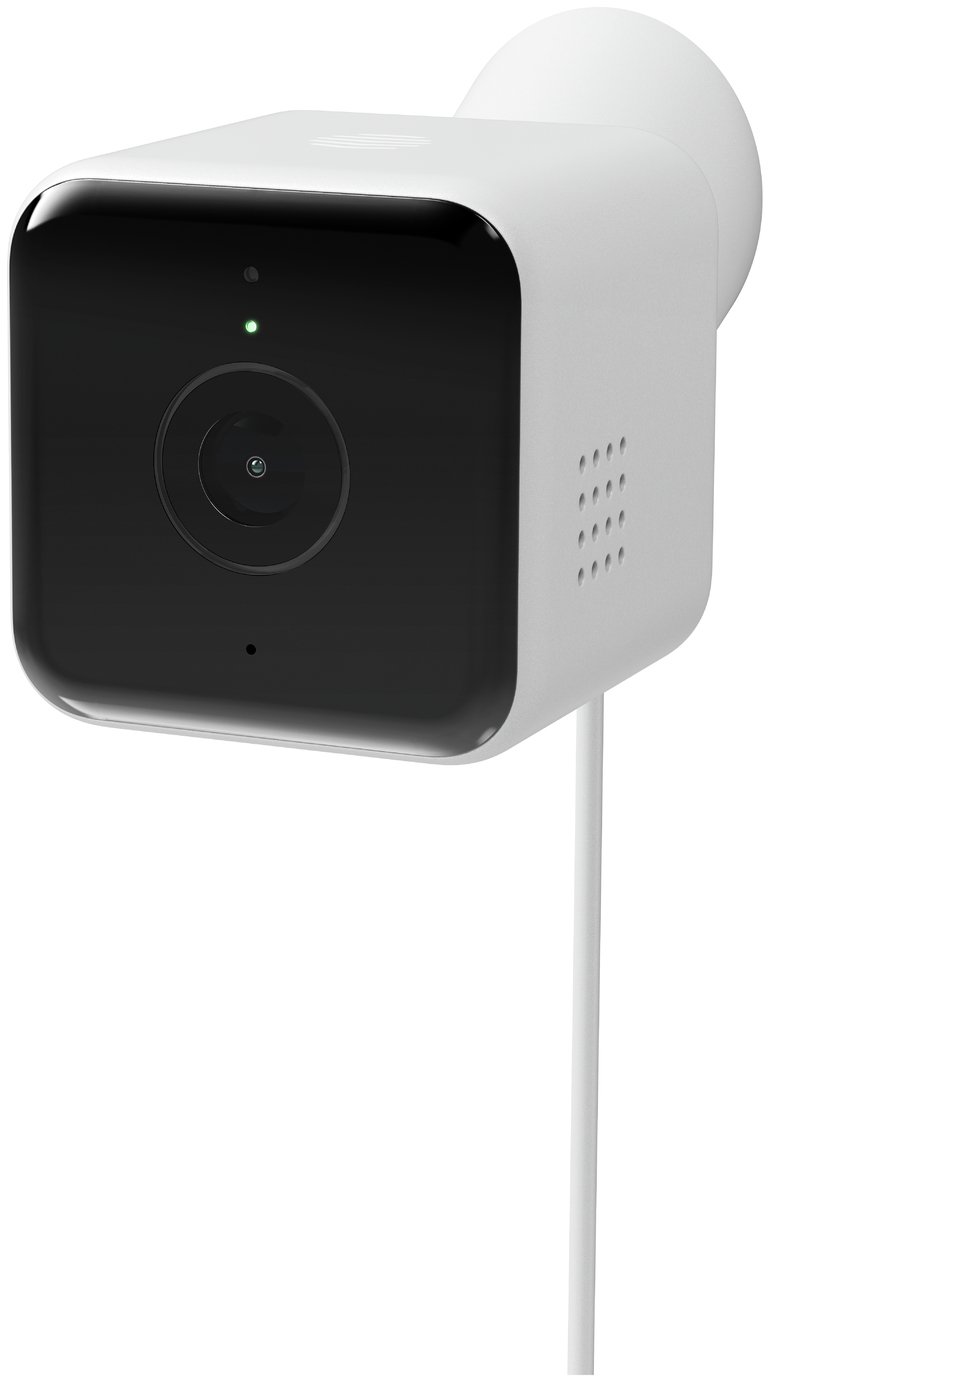 hive outdoor security camera installation